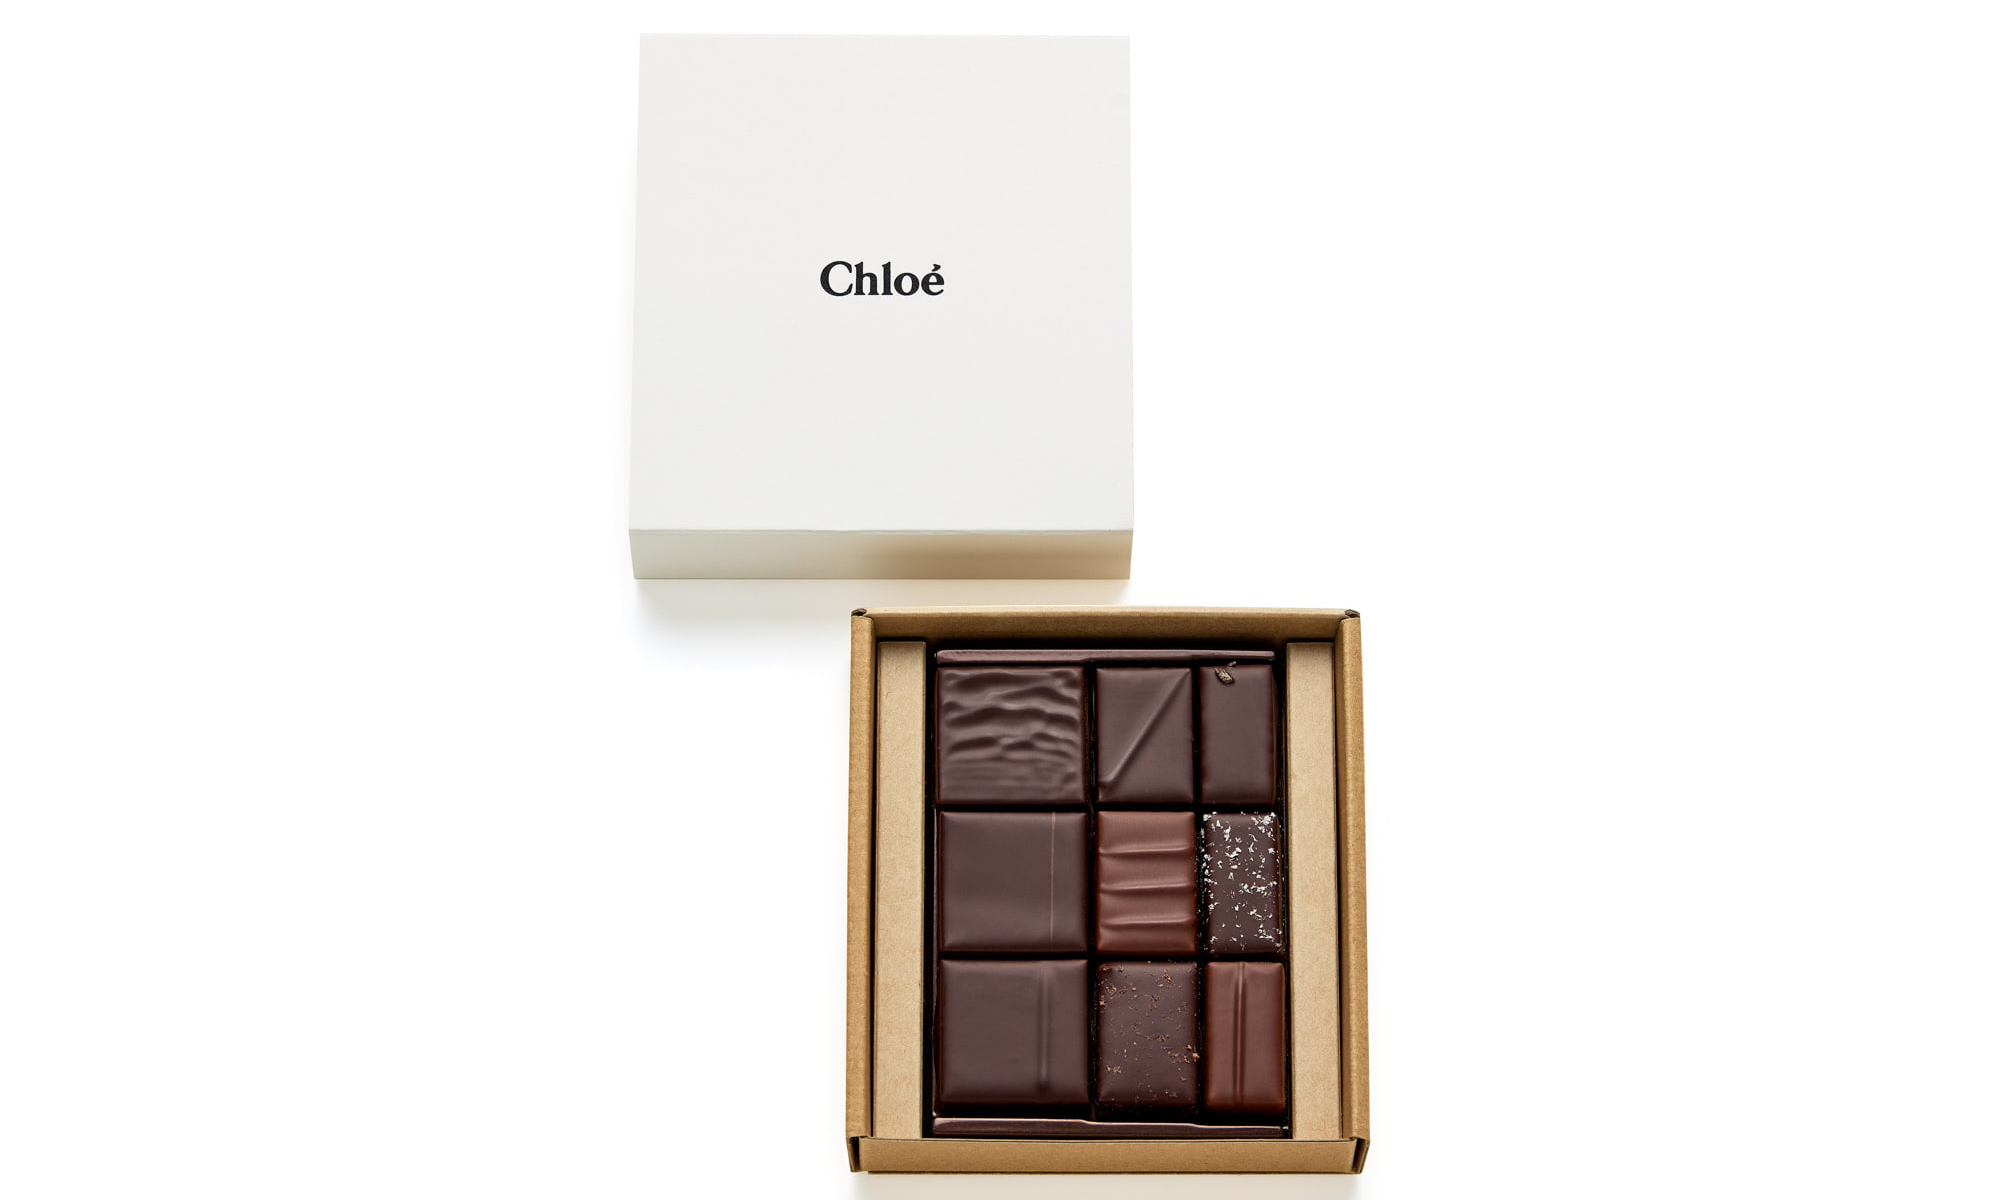 Chloé x Le Chocolat Alain Ducasse 限定巧克力发布